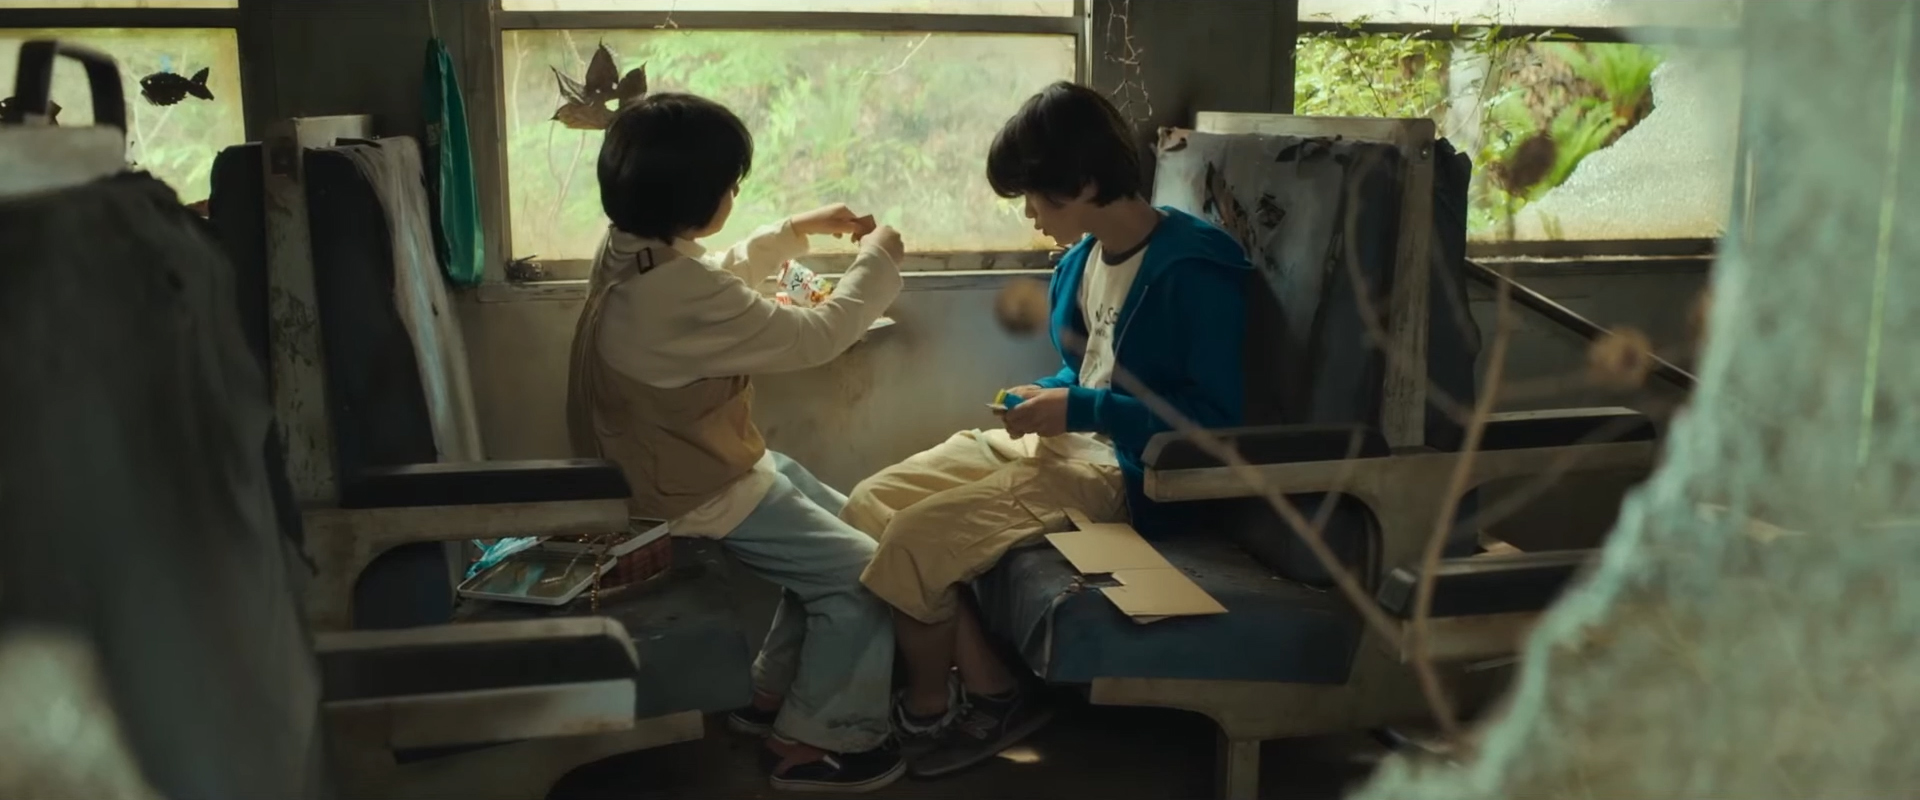 Minato and Yori sit in an abandoned train car.